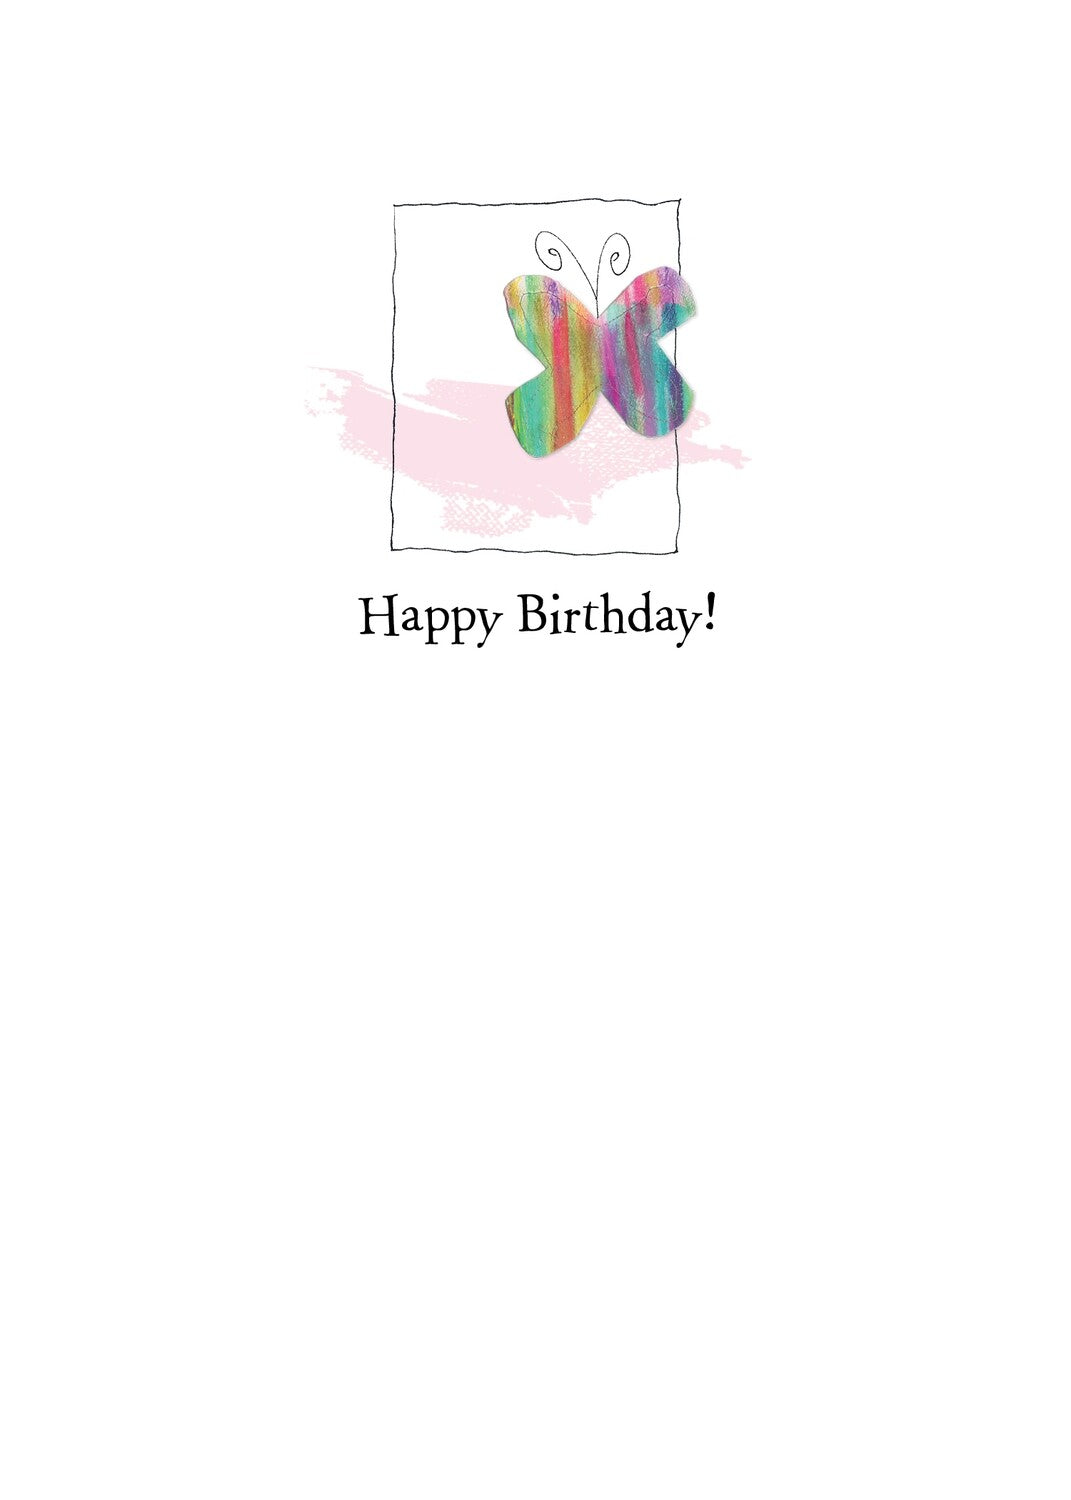 BIRTHDAY CARD - Each year of you ...